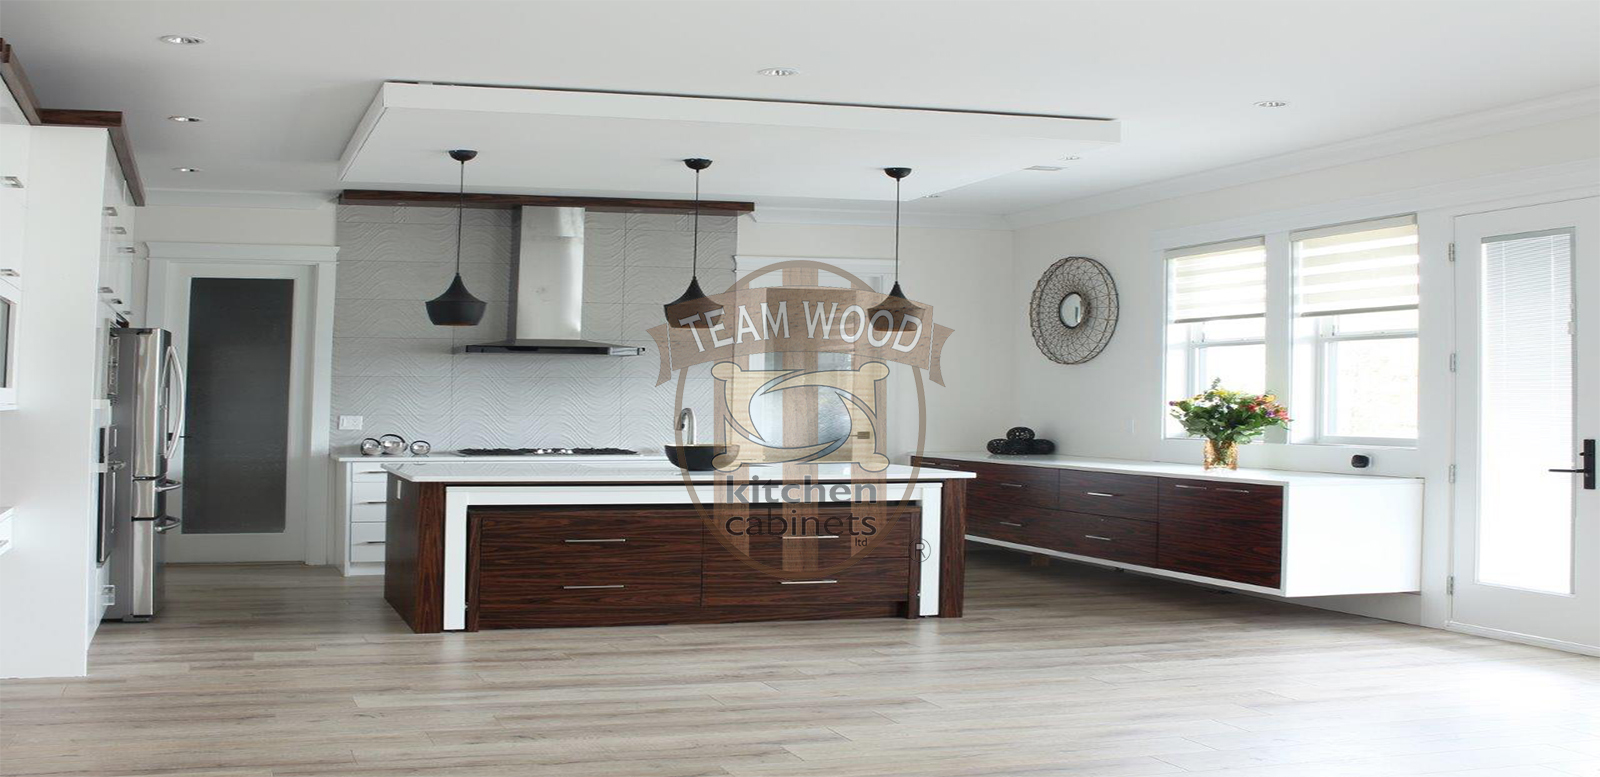 Teamwood-contemporary-kitchens (4).jpg